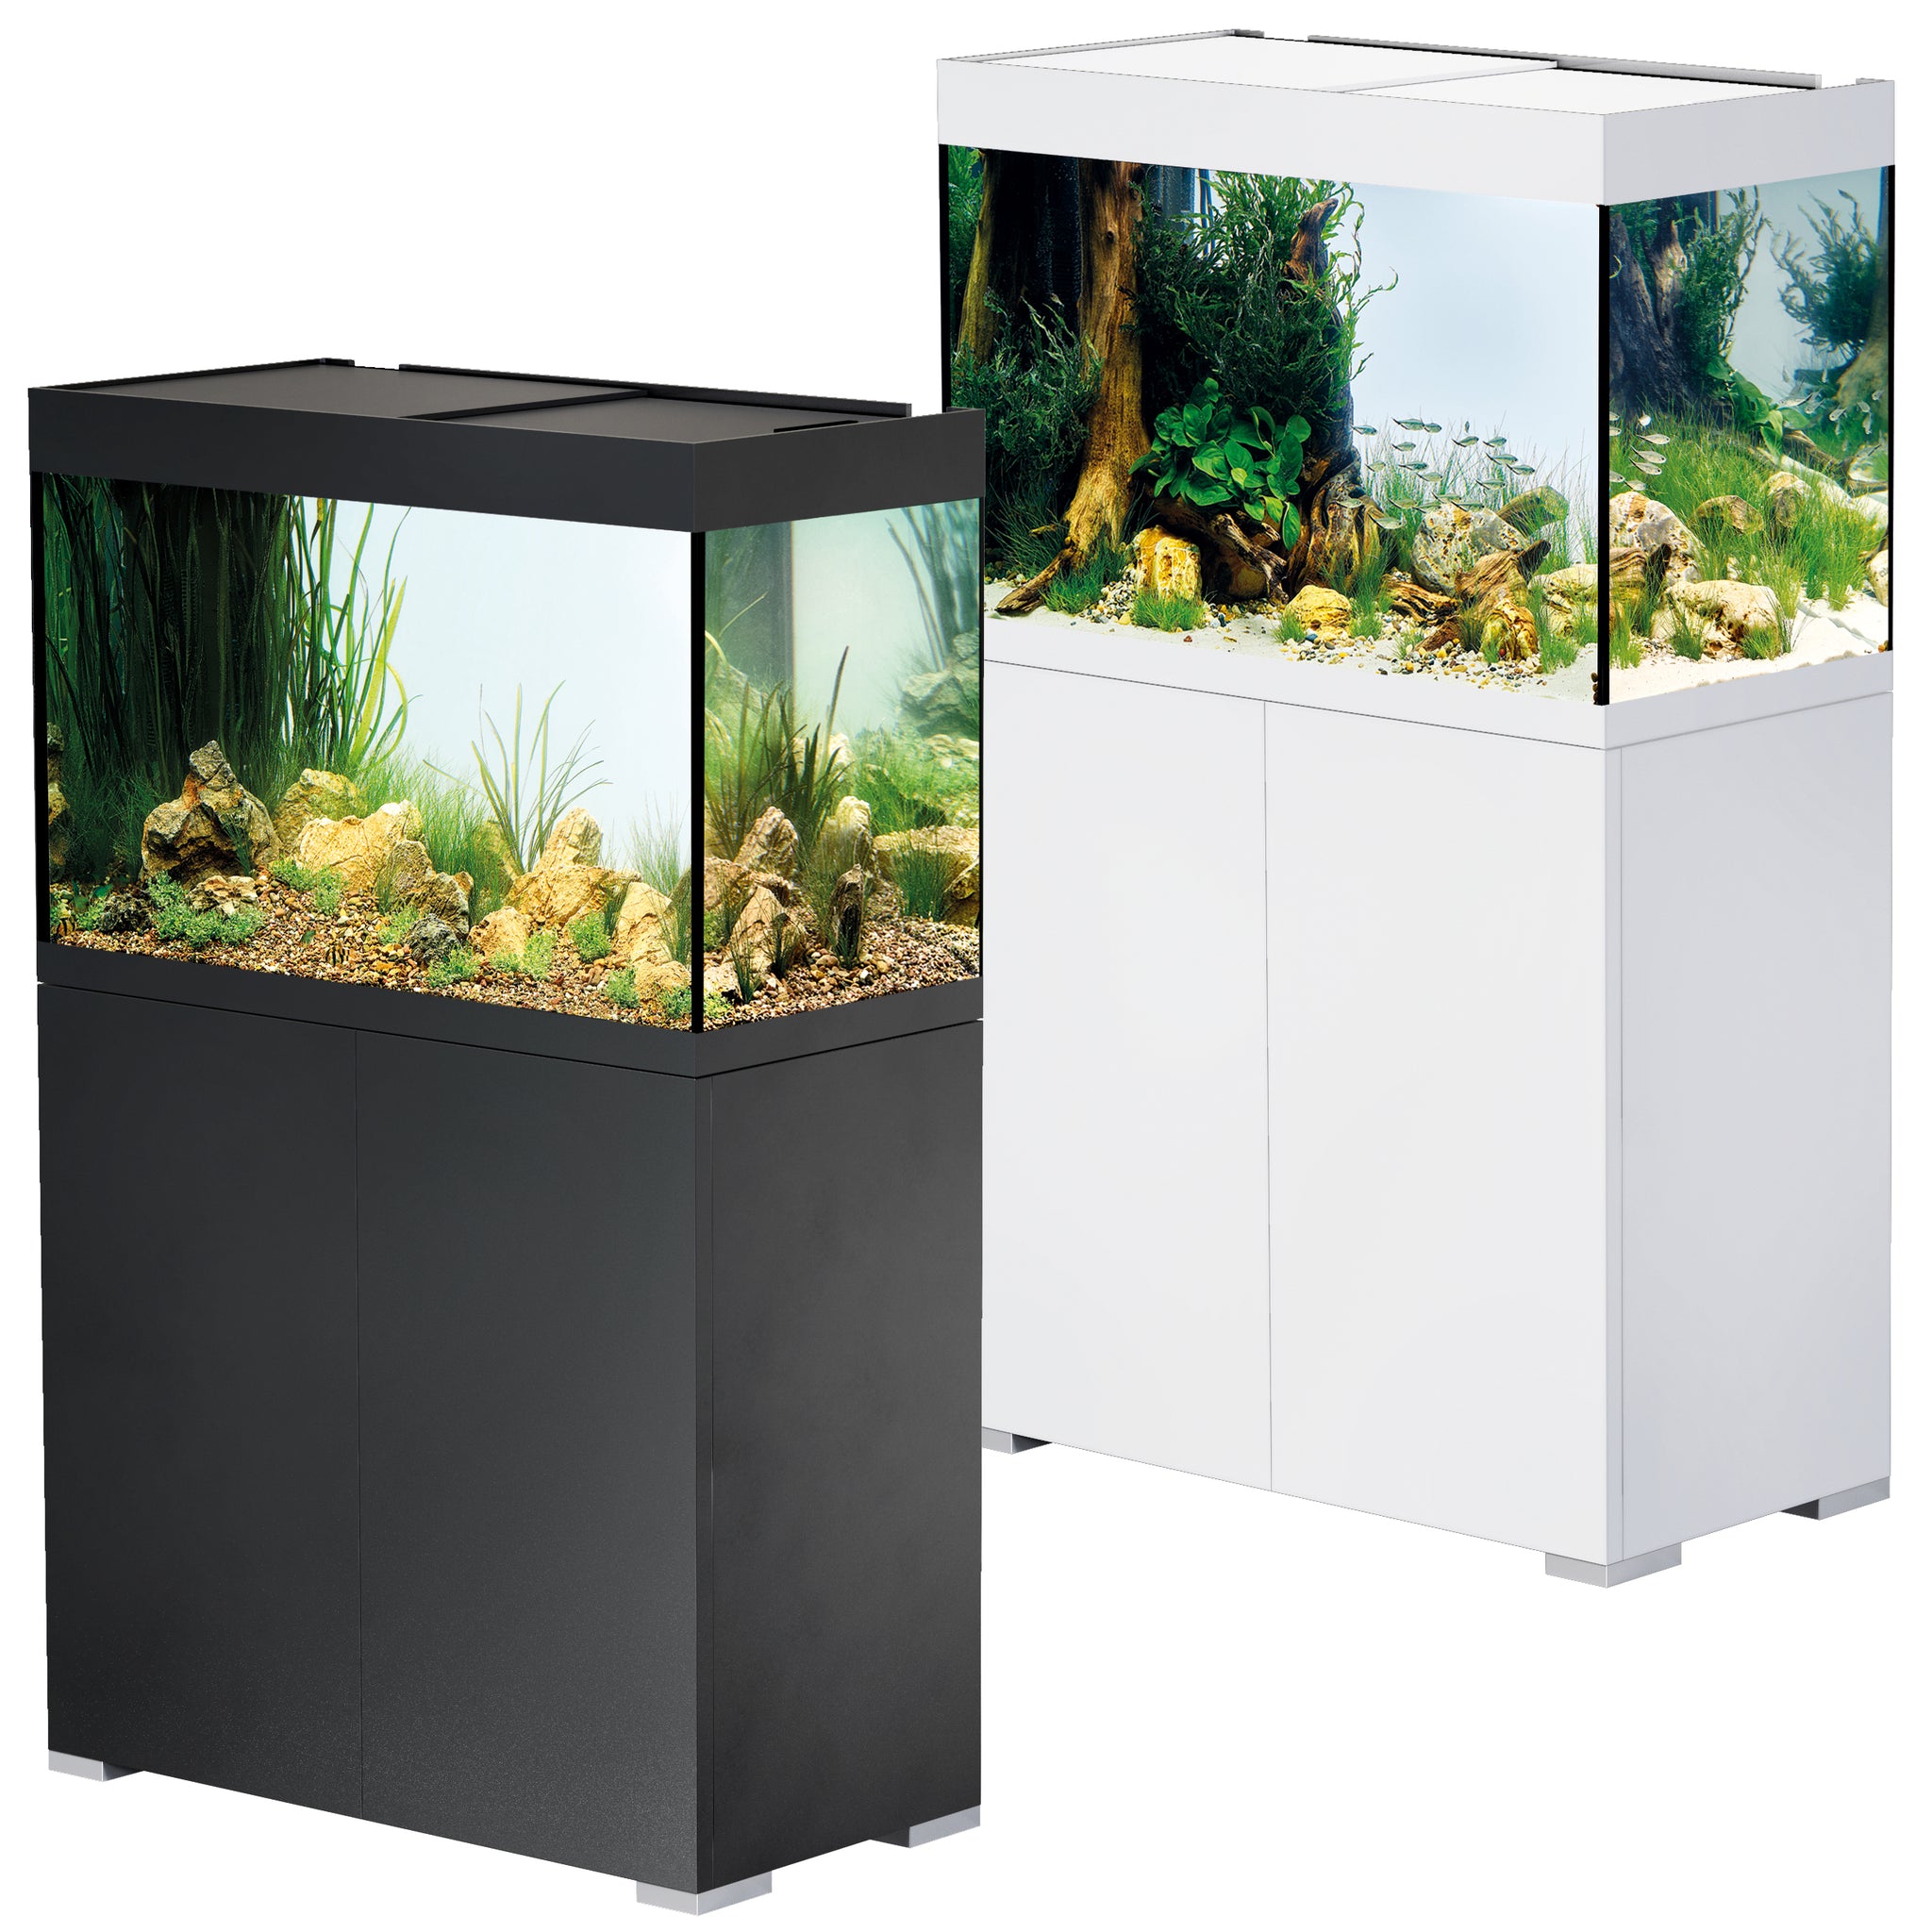 Haringen contrast Namaak Oase StyleLine 175 Aquarium & Cabinets | from Aquacadabra